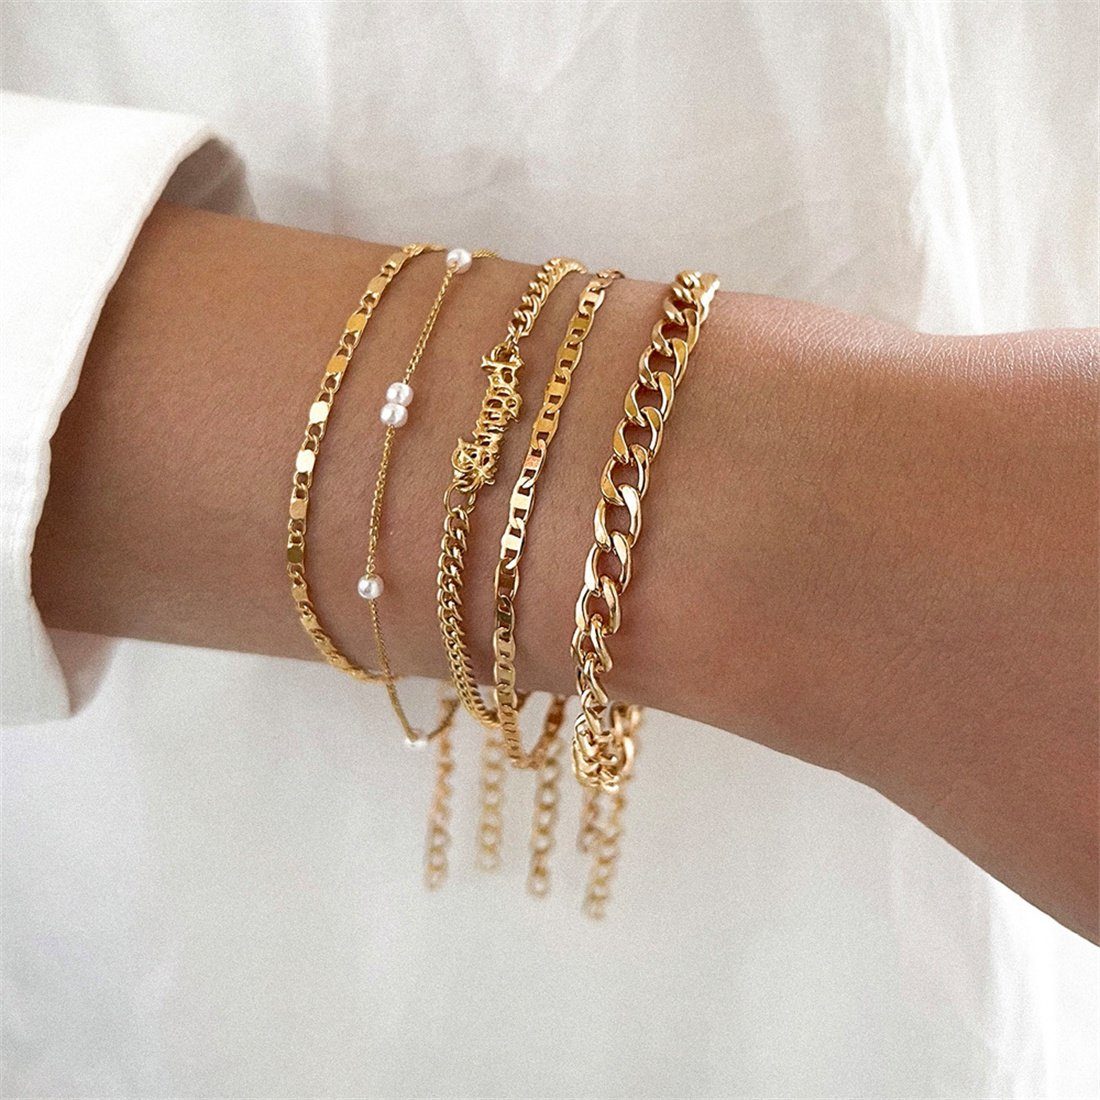 DÖRÖY Armband Damen Gold Brief 5 Set, Set Perle Mode Armband Armband von Trend